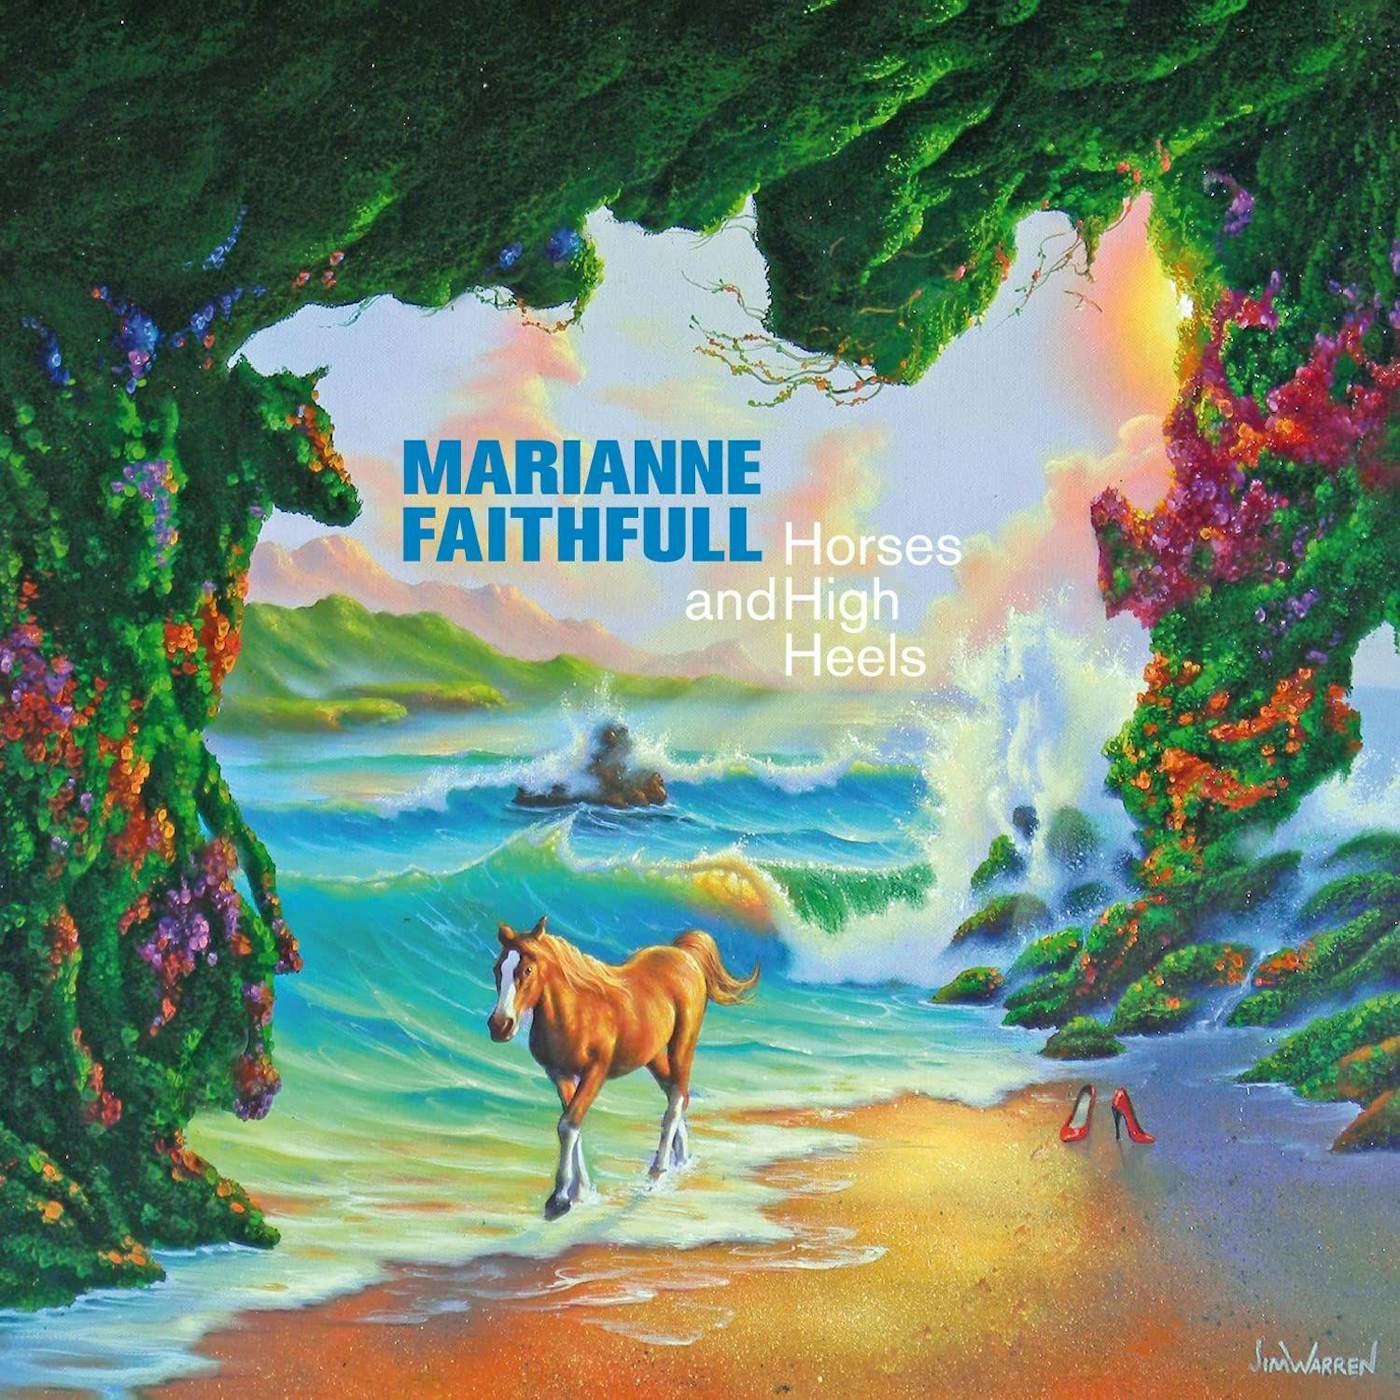 Marianne Faithfull Horses & High Heels (Yellow) Vinyl Record